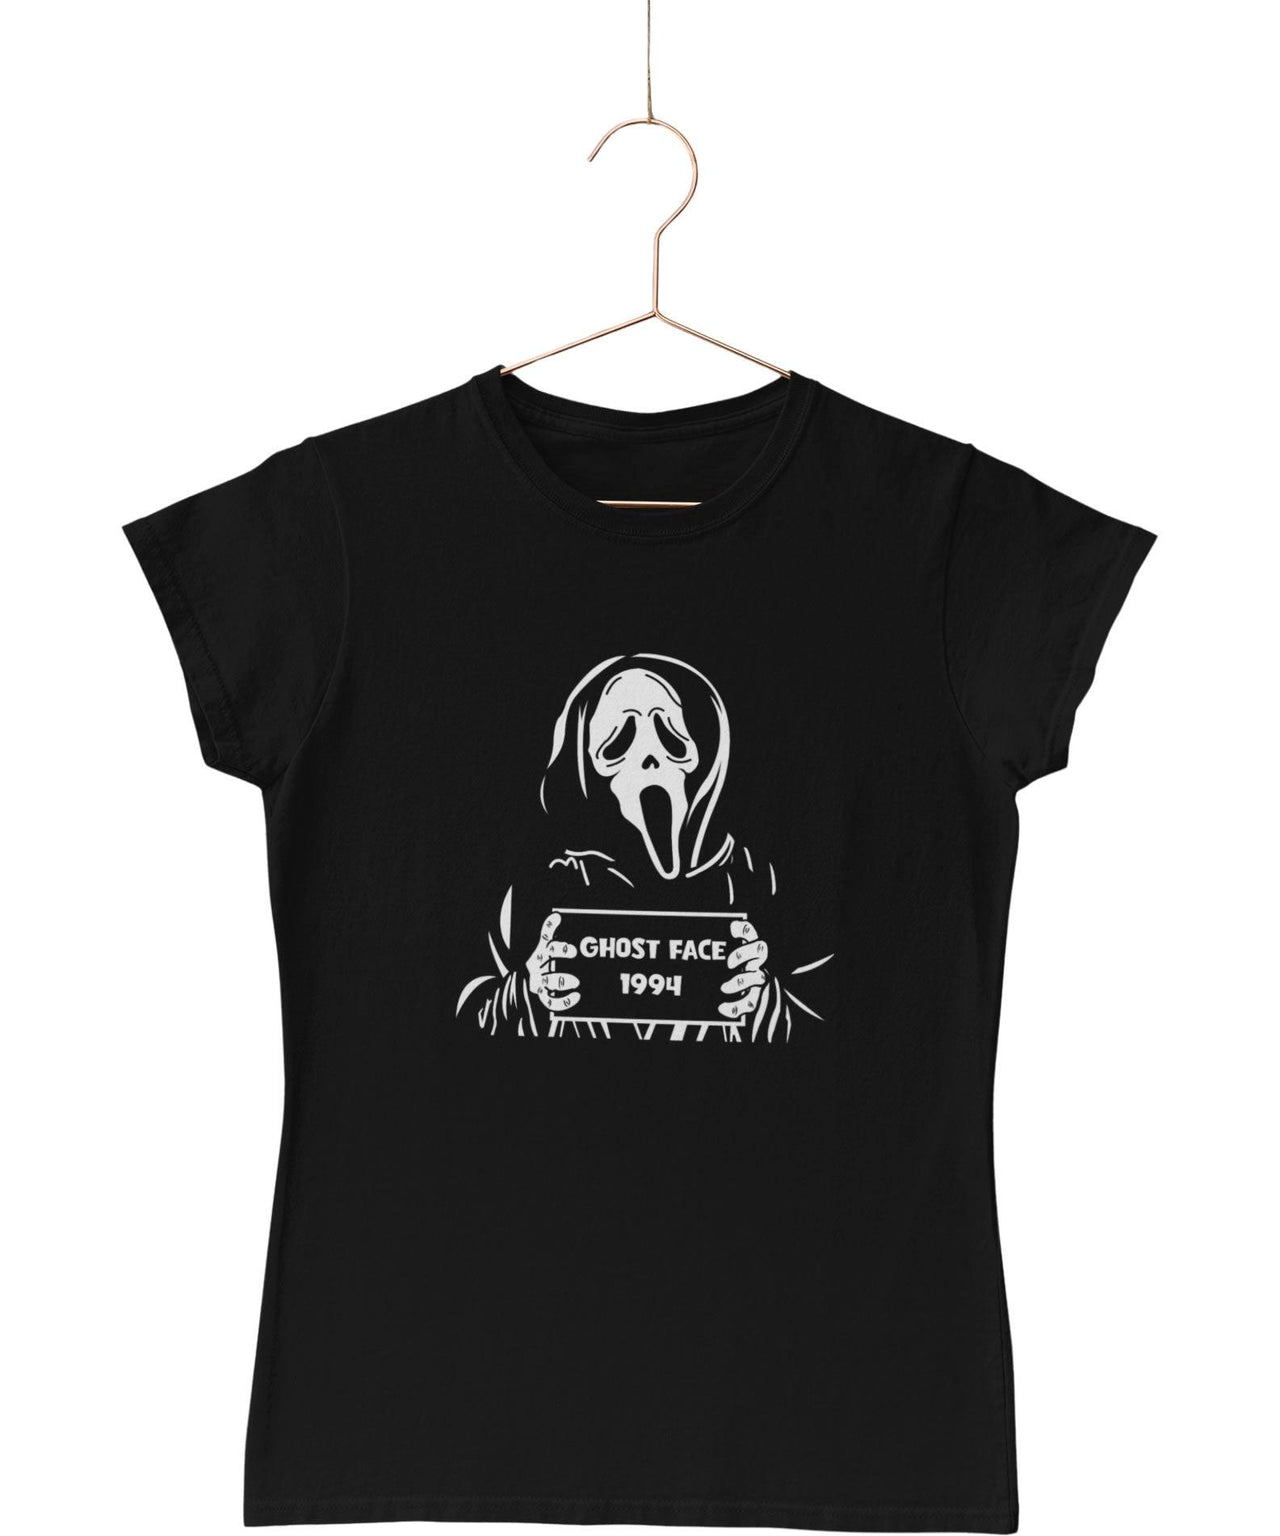 Ghostface Mugshot Horror Film Tribute Womens Fitted T-Shirt 8Ball